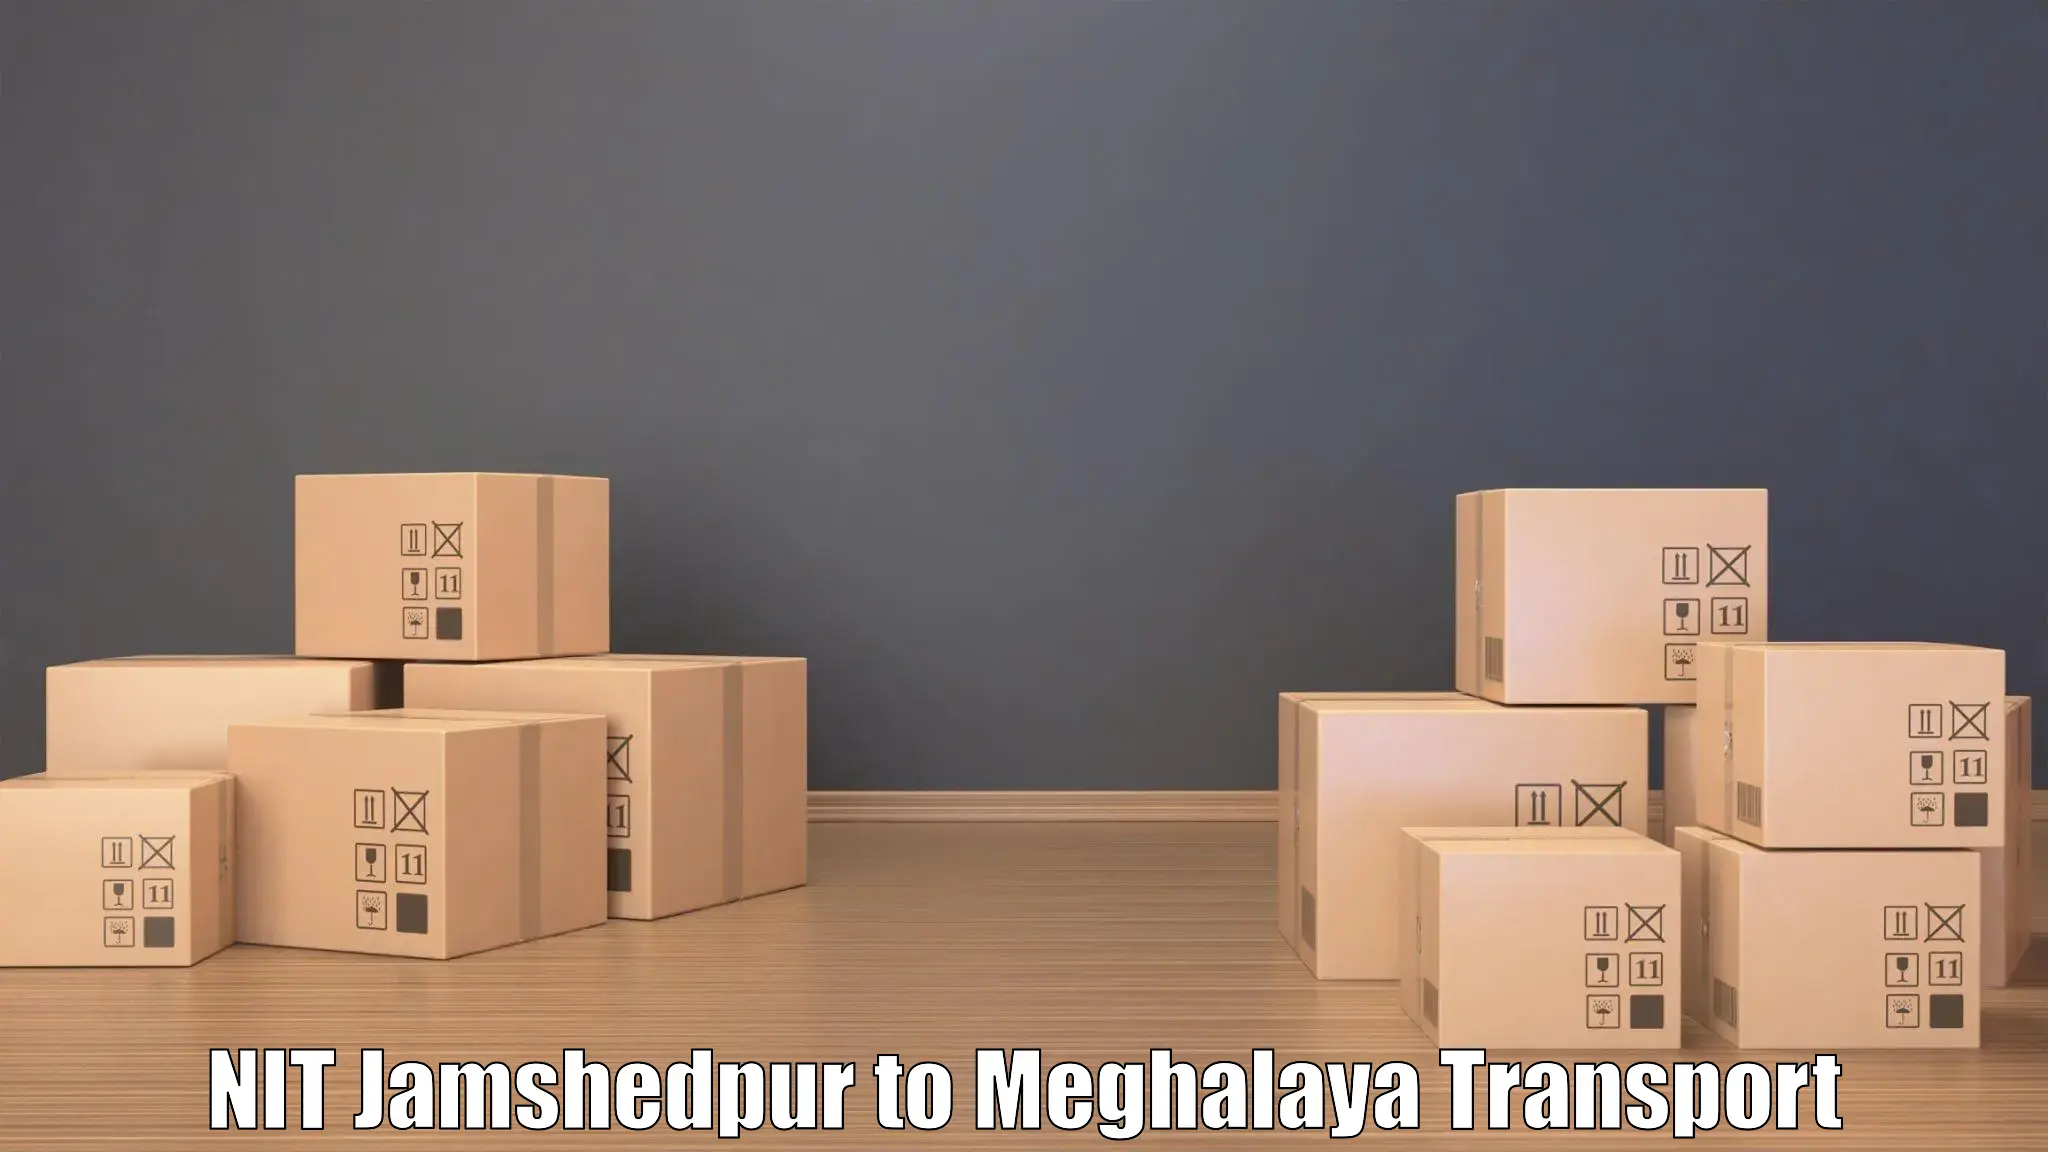 Sending bike to another city NIT Jamshedpur to Meghalaya